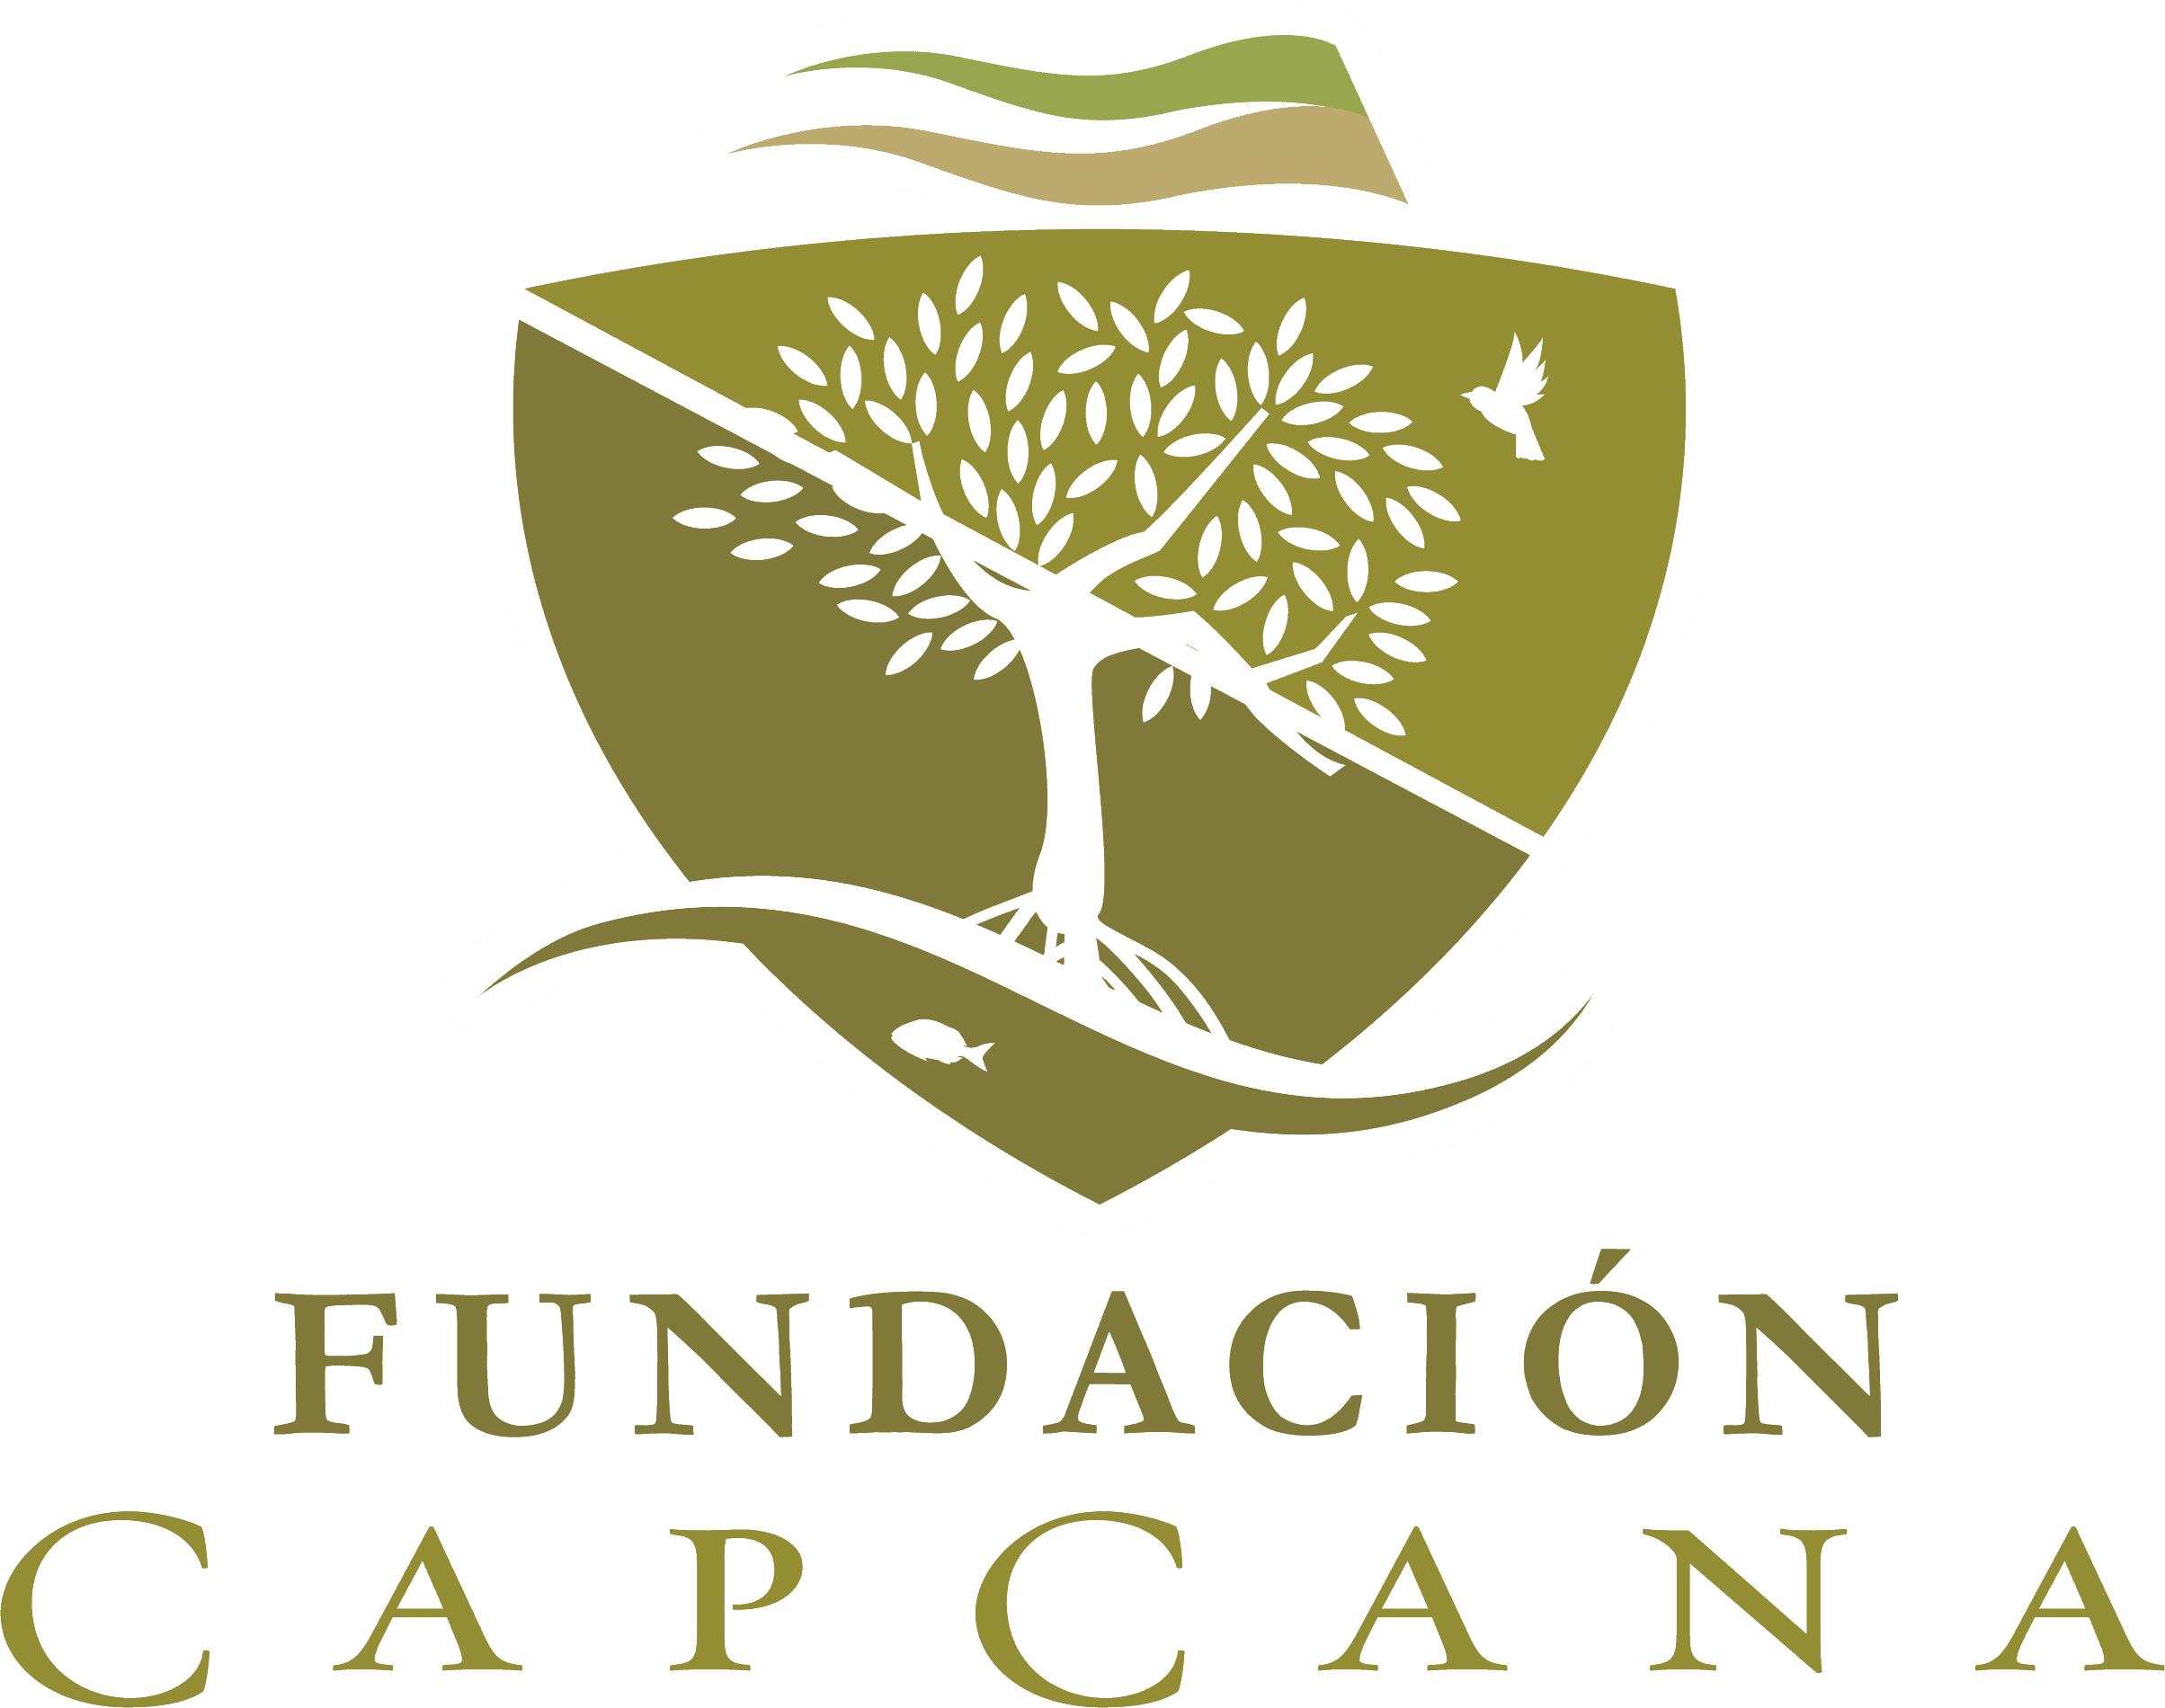 Fundación Cap Cana : 